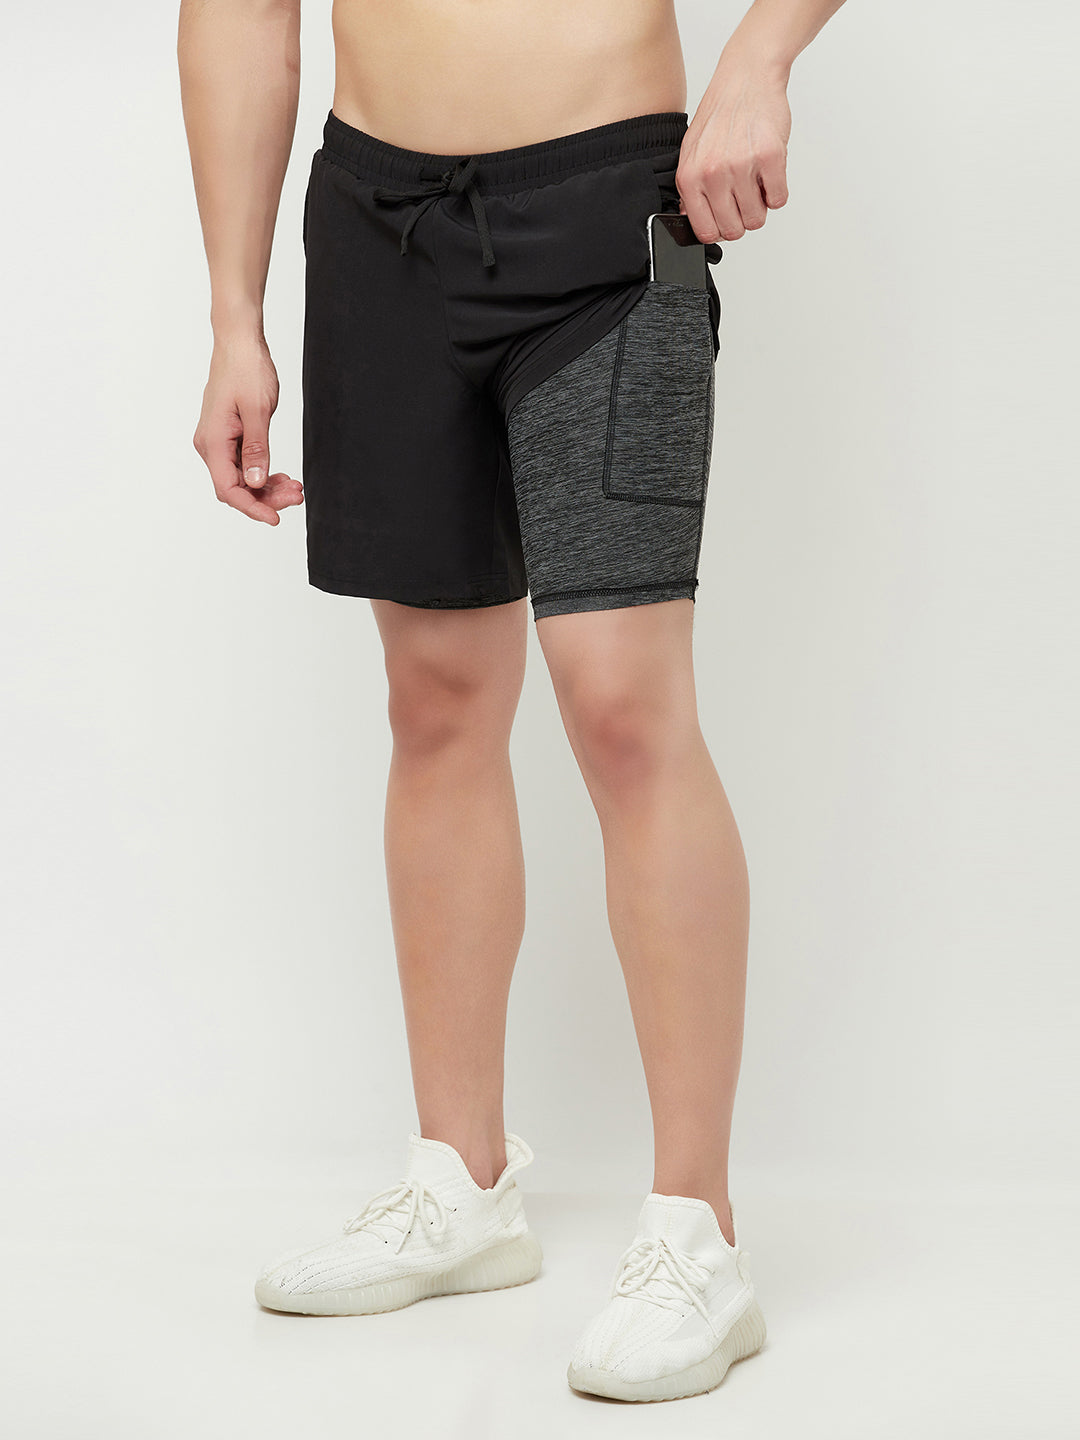 Women's Sports Shorts with Phone Pocket- Navy Printed TRUEREVO™